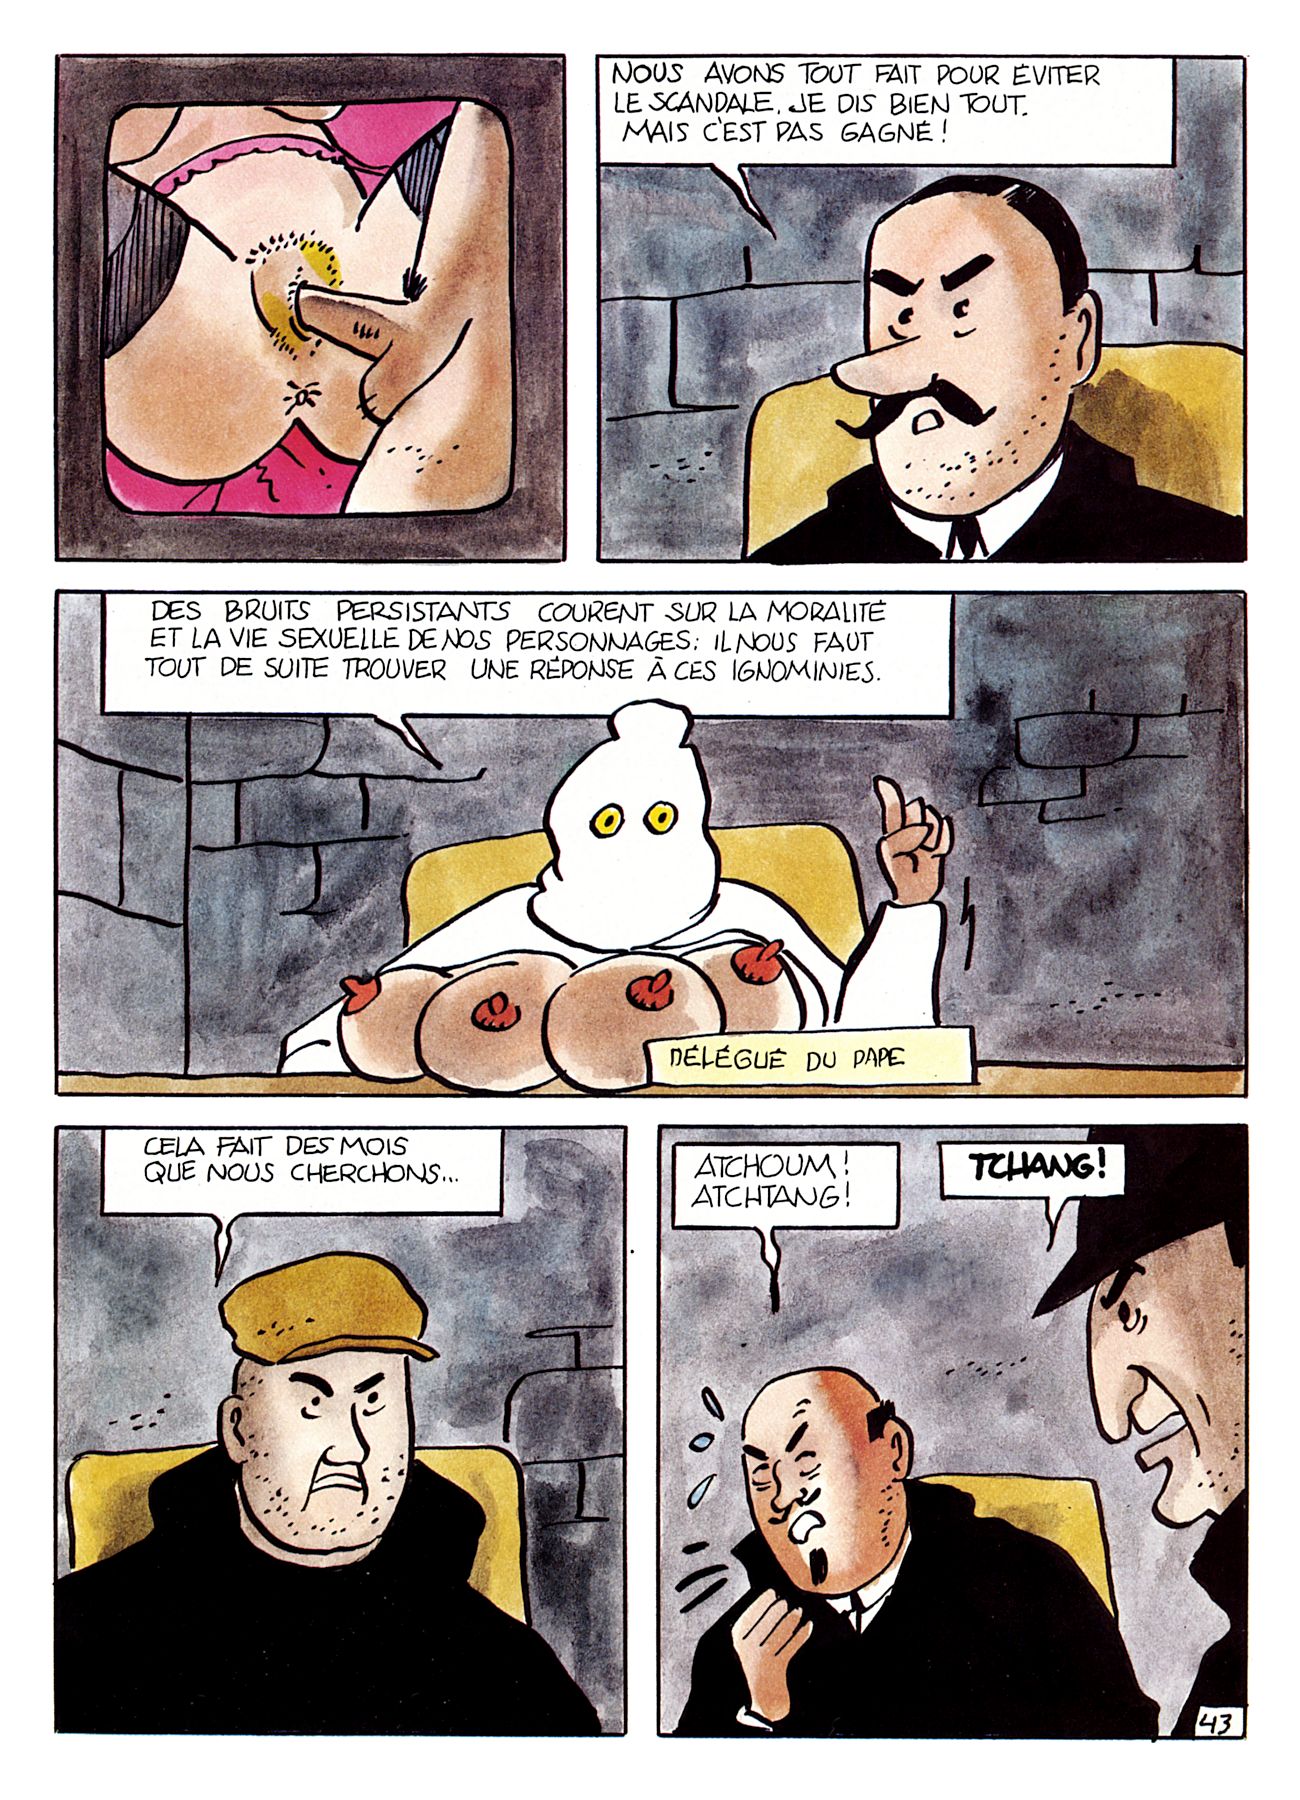 La-Vie-Sexuelle-De-Tintin-1992-All-64-pages-French-page43--Gotofap.tk--56145738.jpg